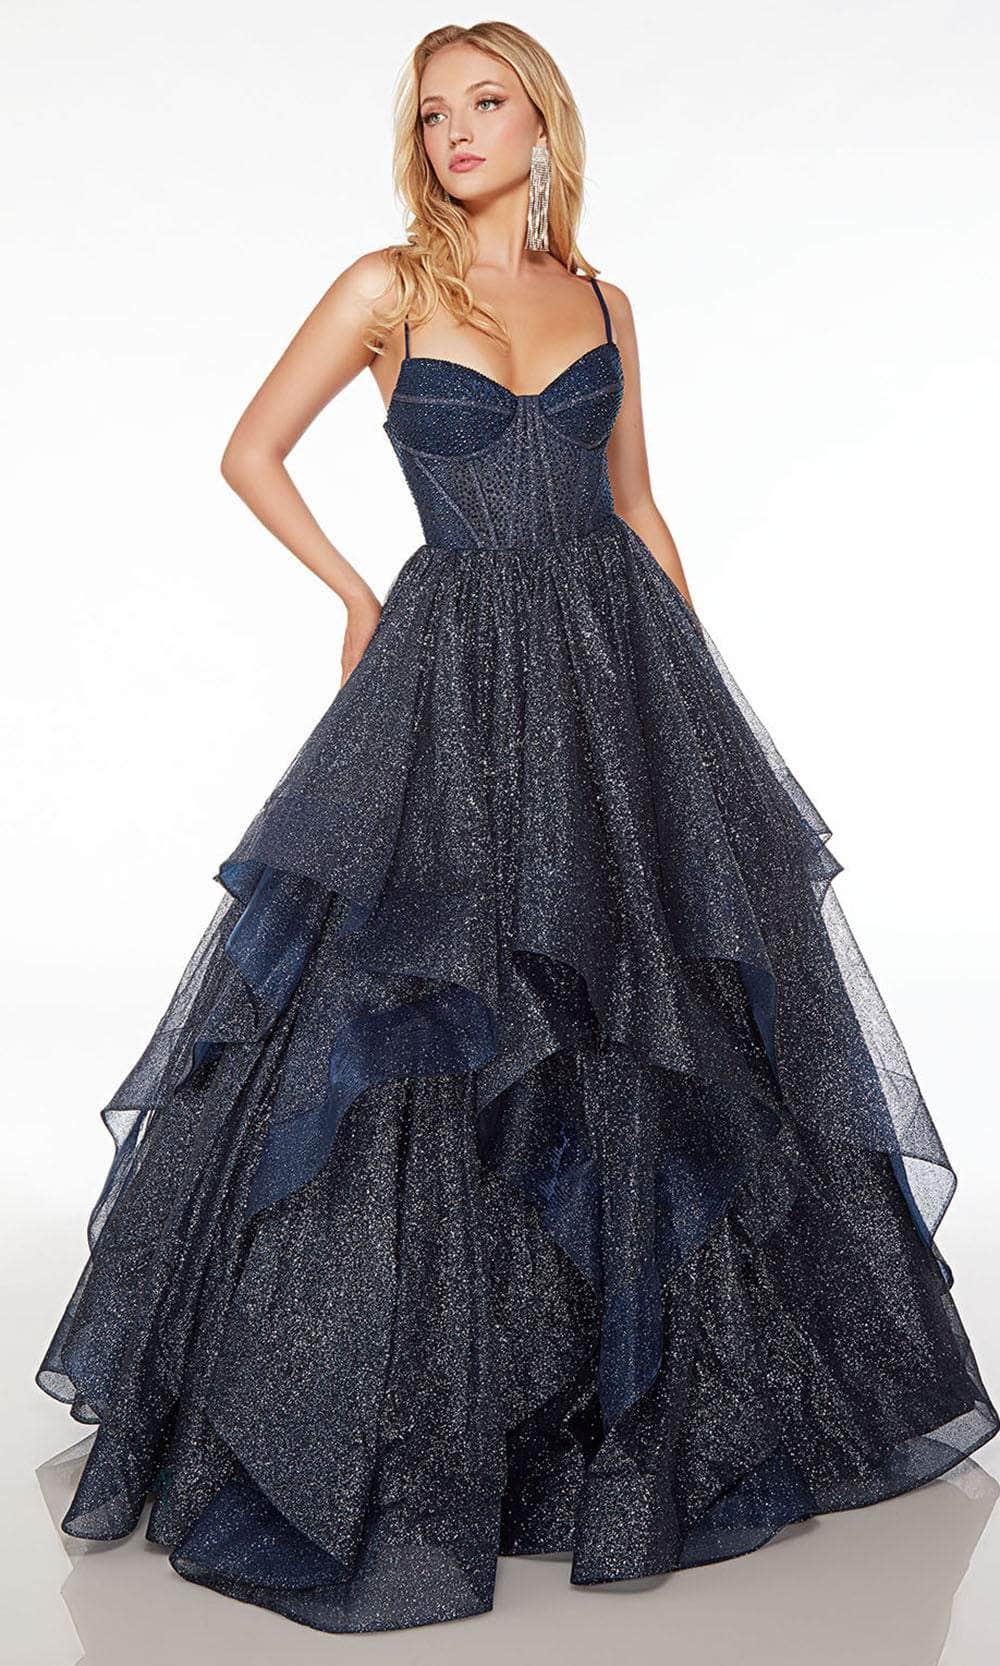 Image of Alyce Paris 61637 - Bustier Glitter Prom Dress